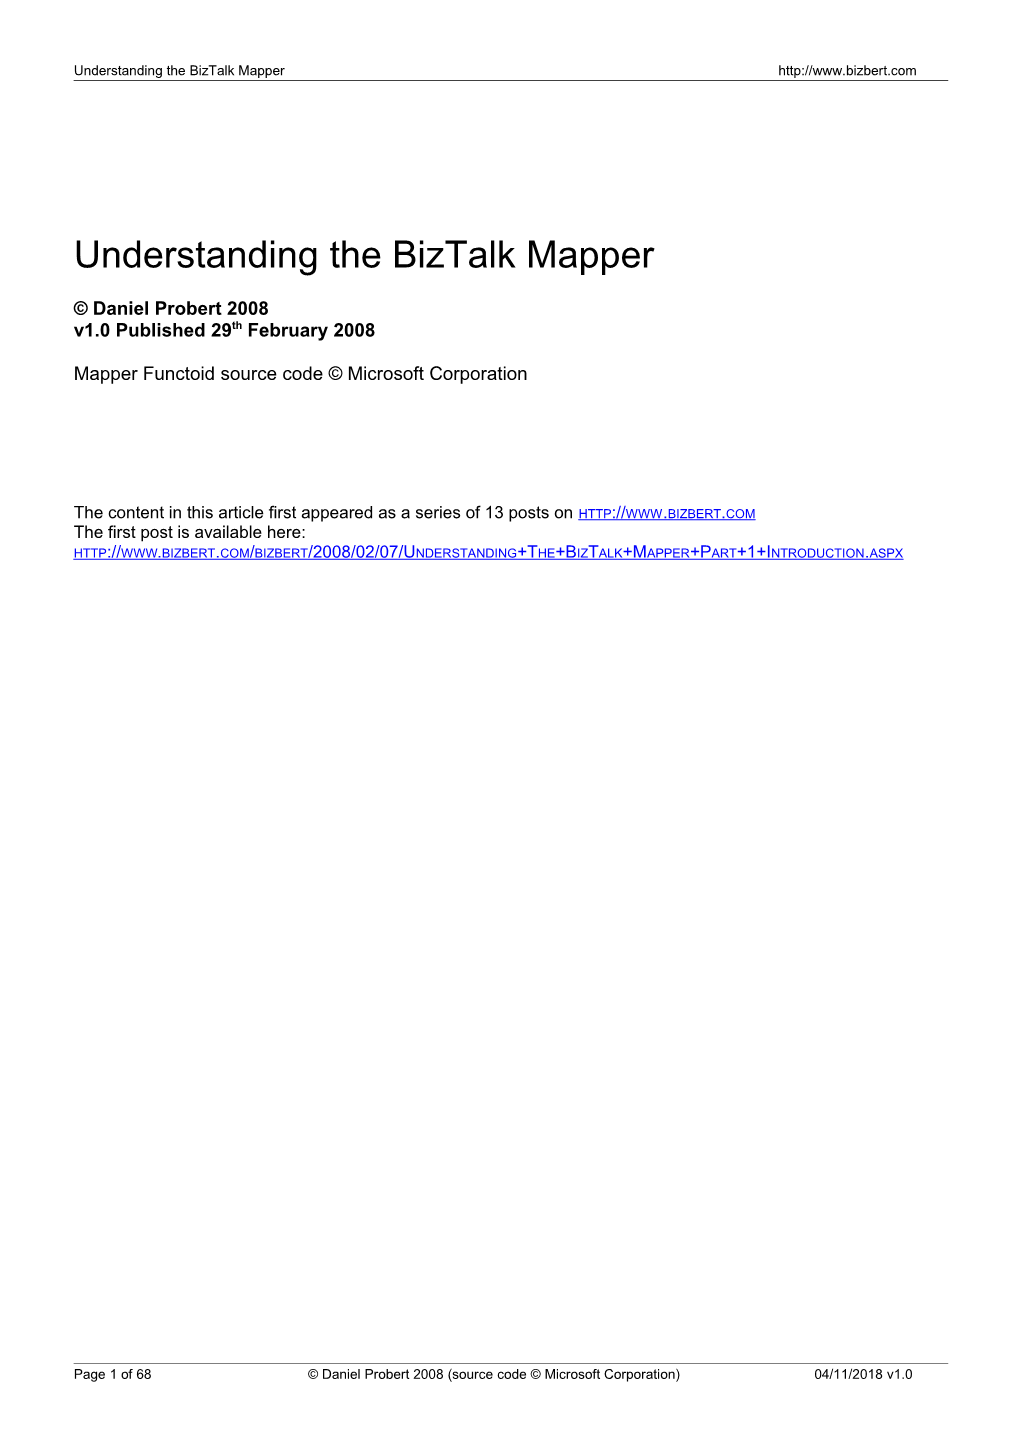 Understanding the Biztalk Mapper